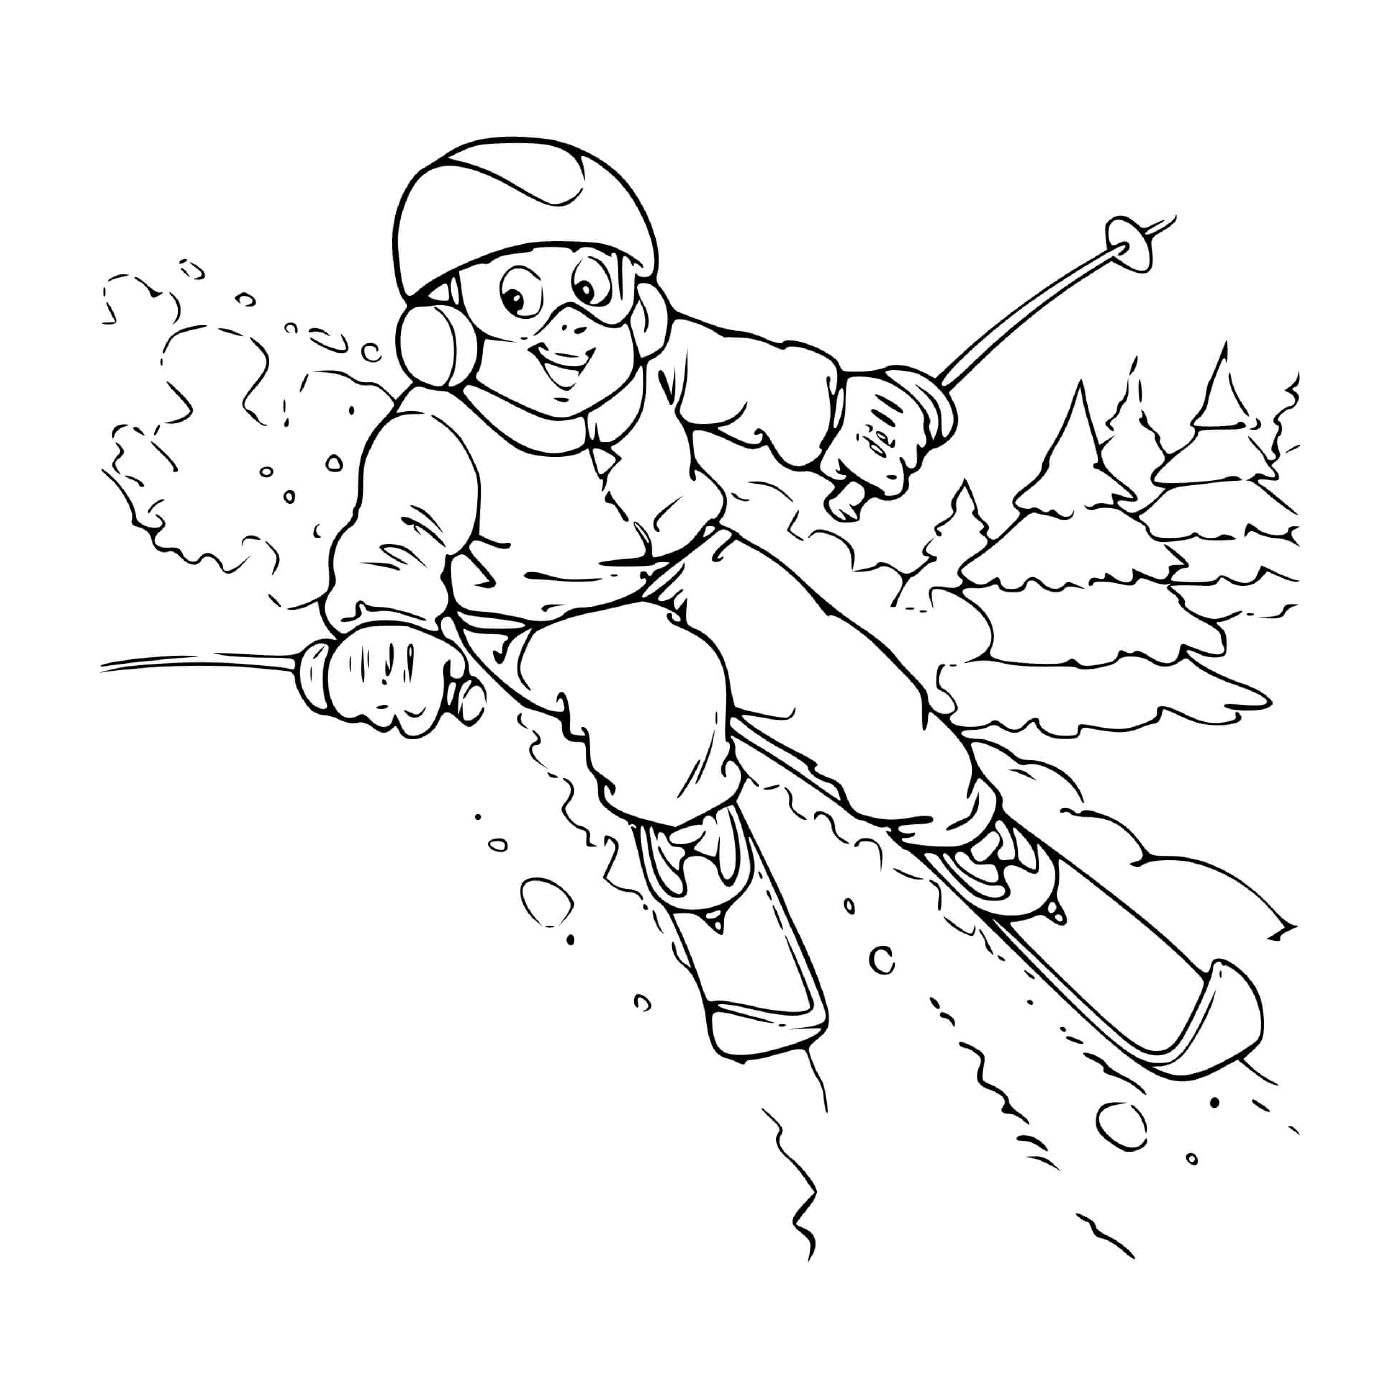   Enfant glisse montagne skis 